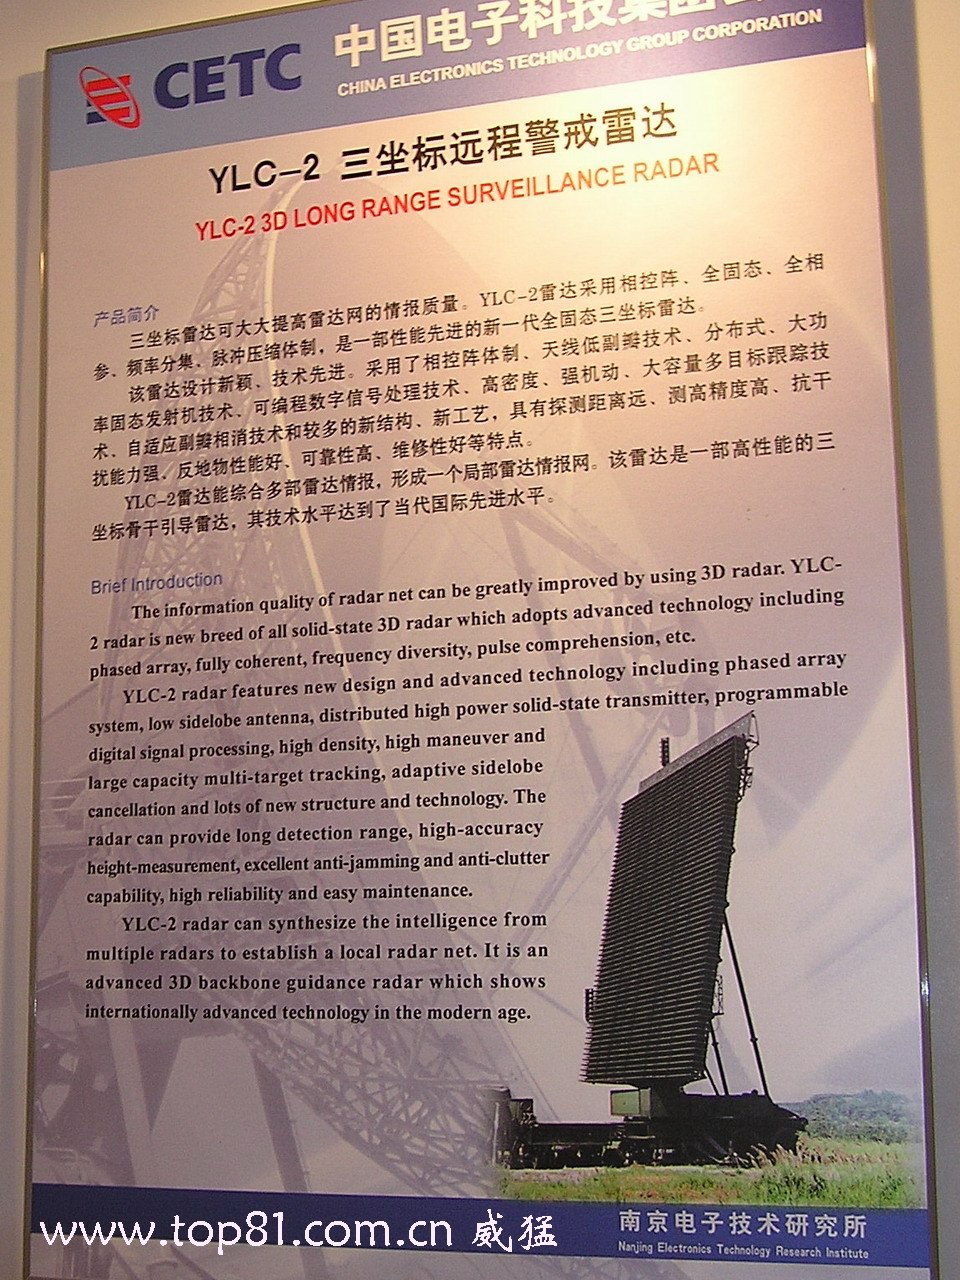 YLC-2 3D long range surveillance radar